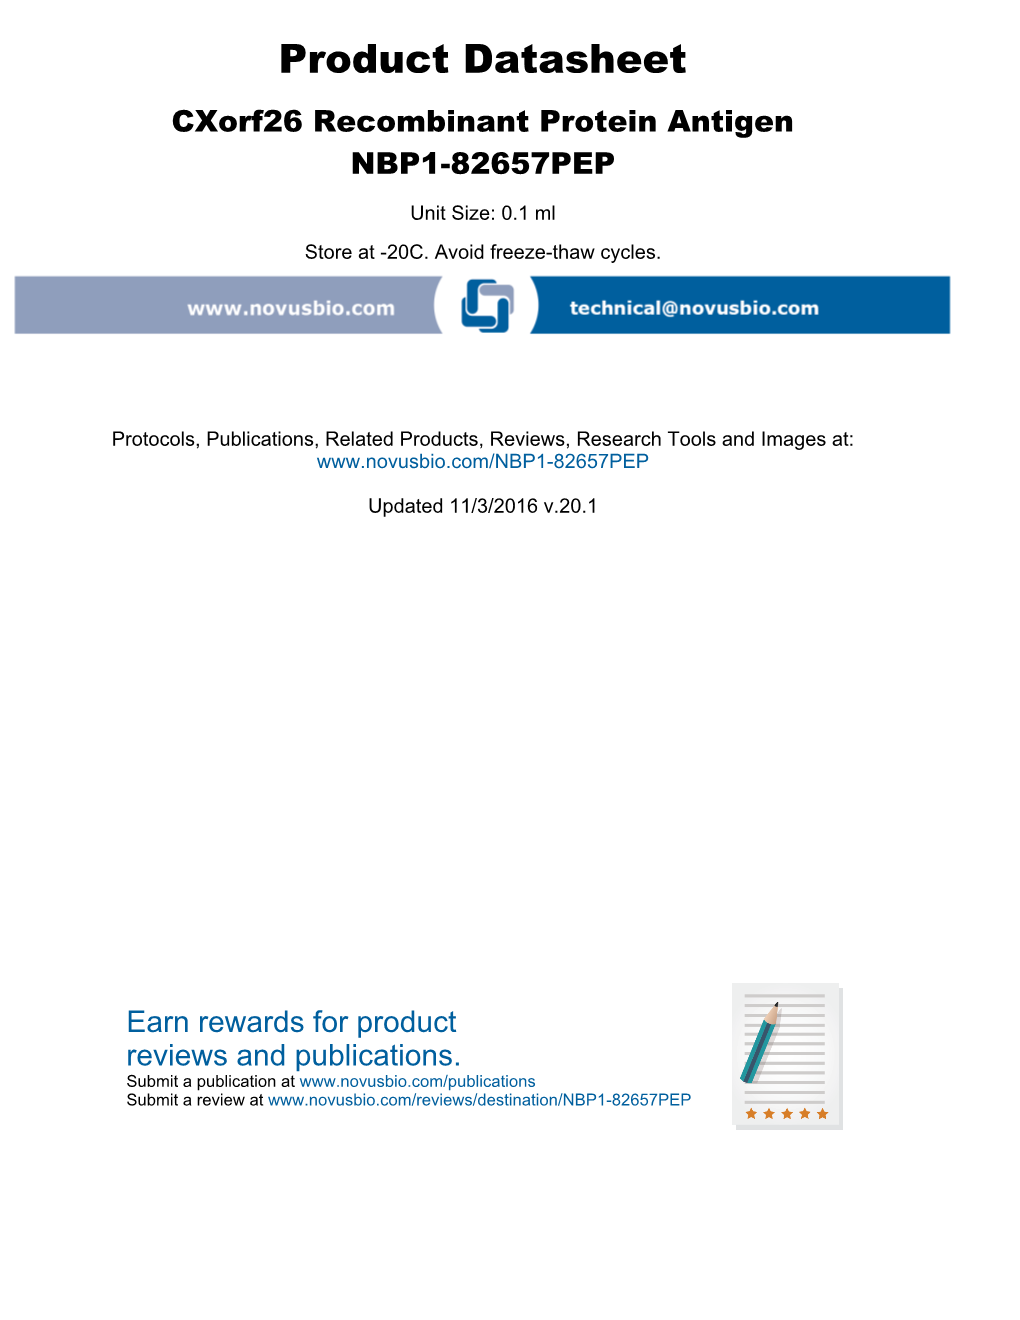 Product Datasheet Cxorf26 Recombinant Protein Antigen NBP1